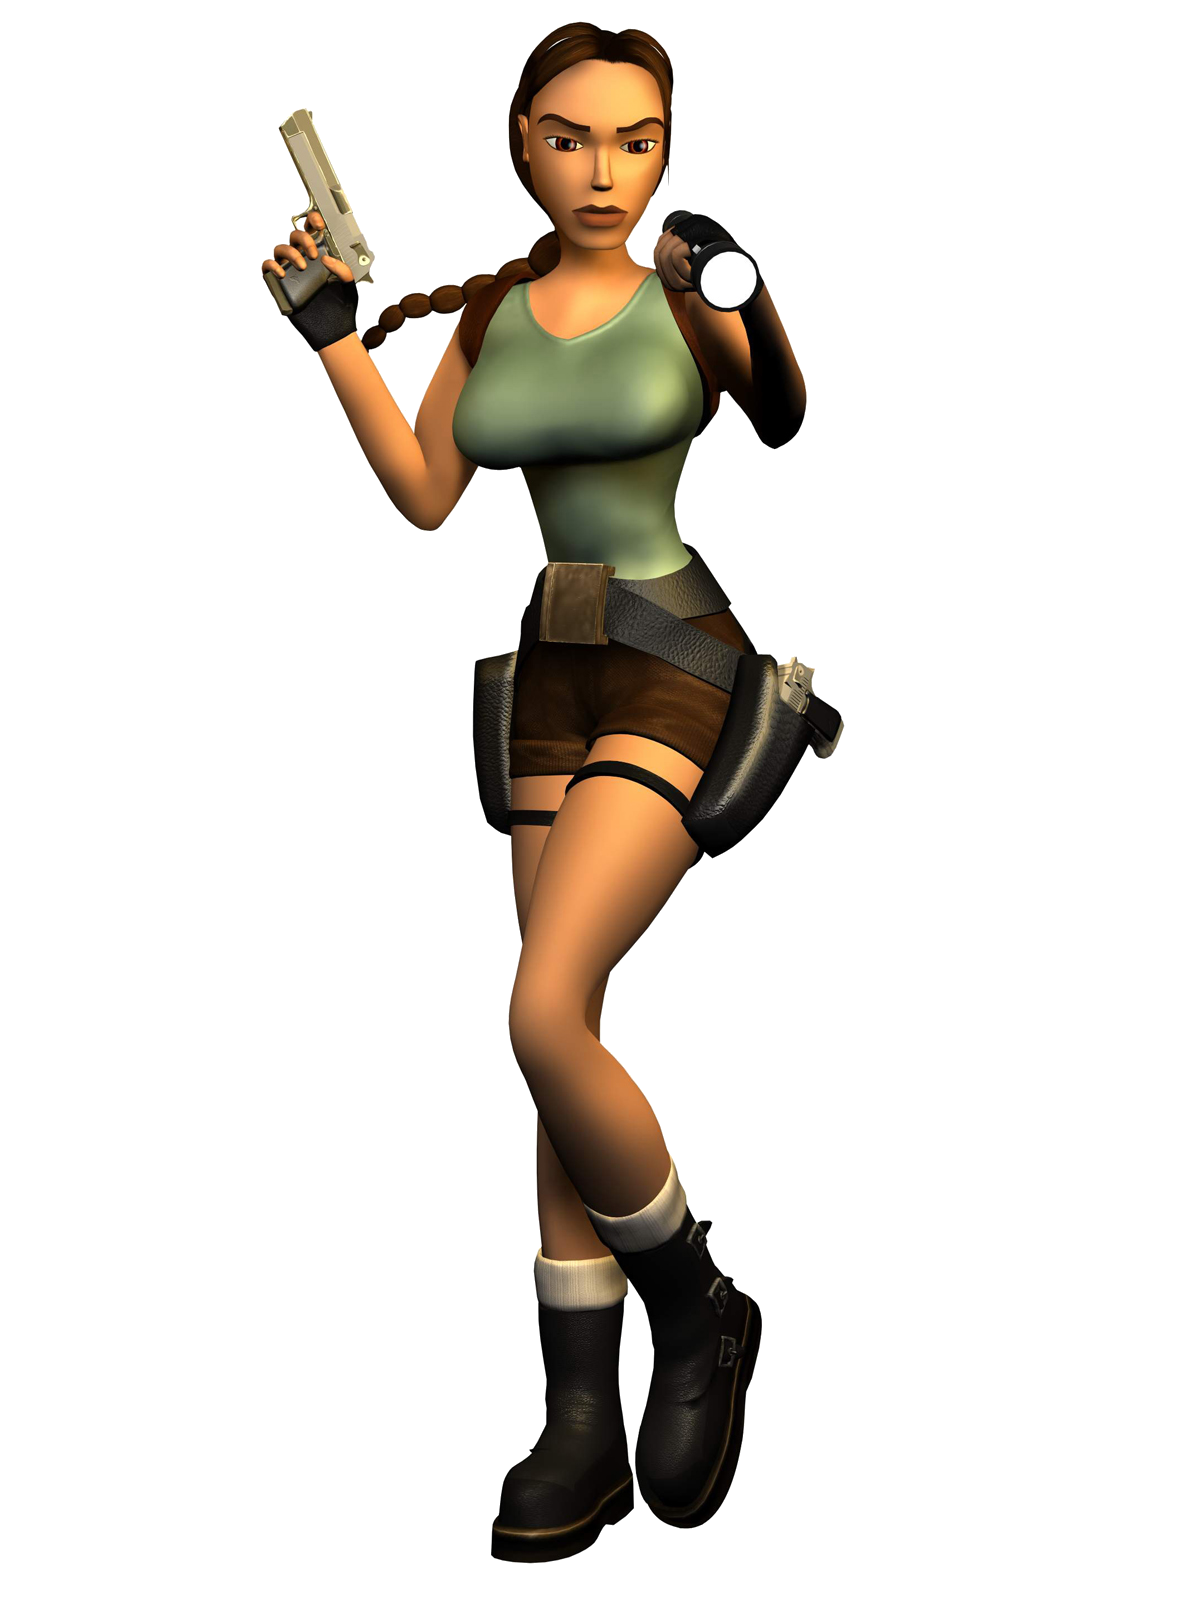 Lara Croft PNG Image with Transparent Background